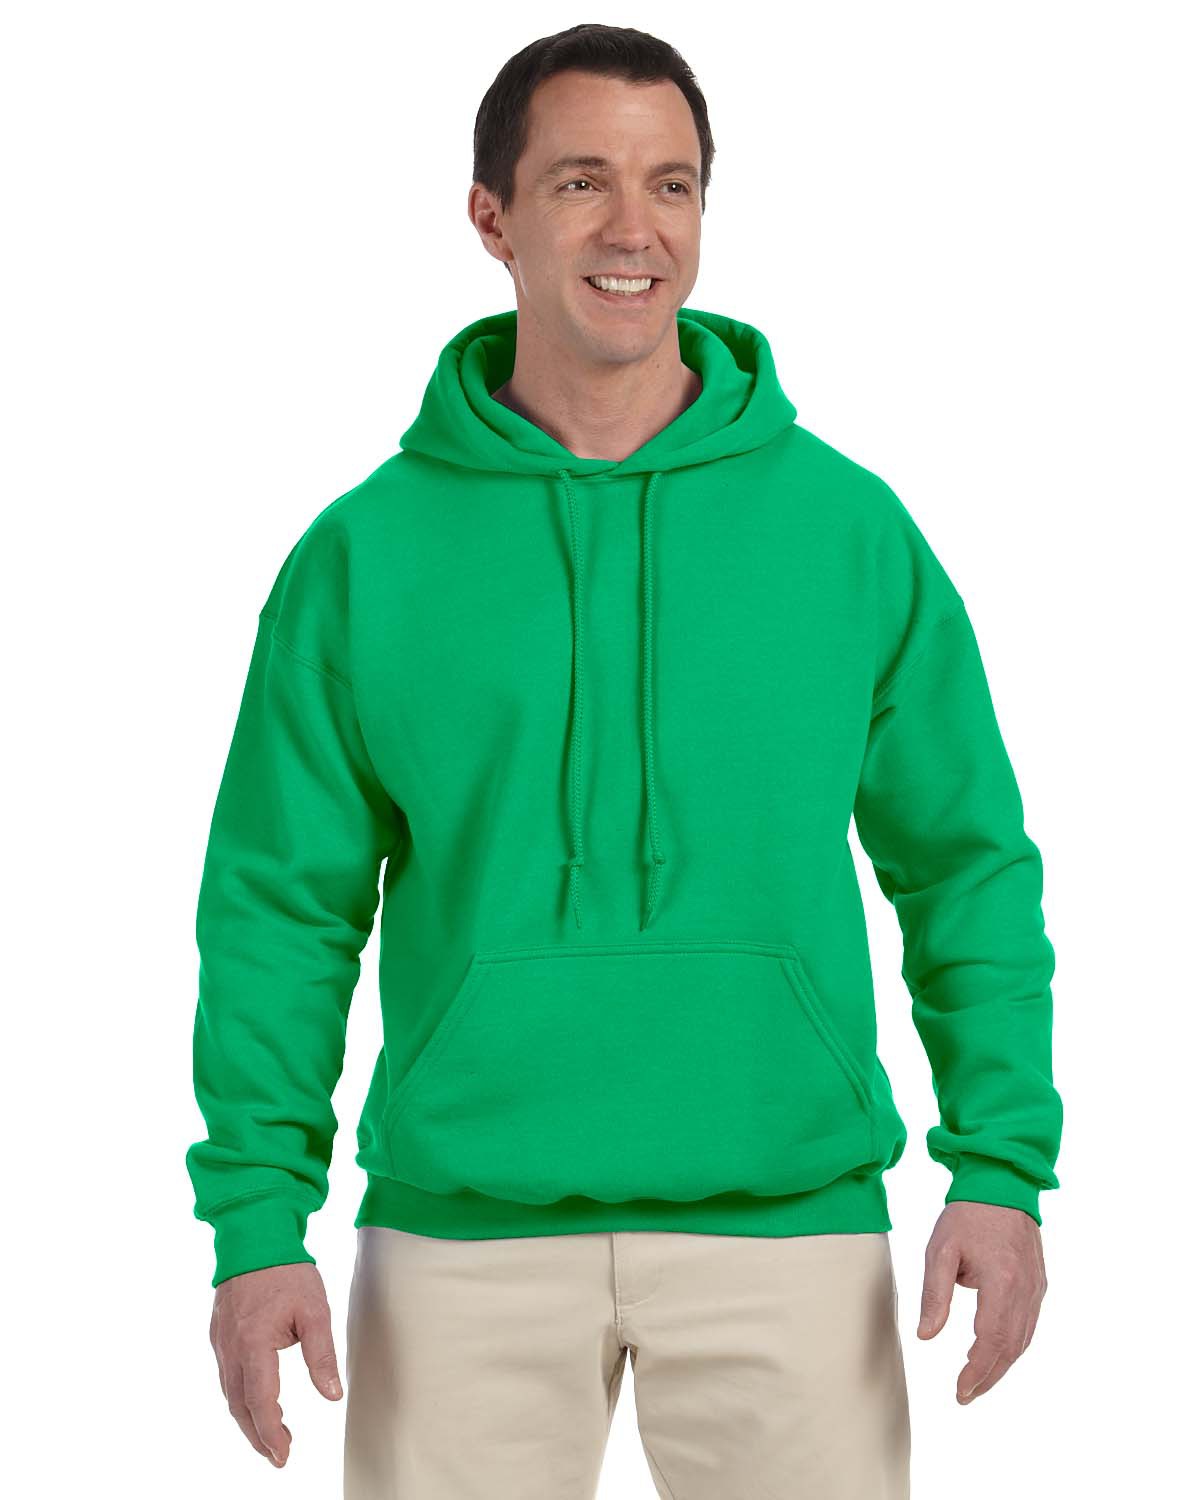 Mens sweatshirt plain pullover S to 2XL Gildan DryBlend Adult Hooded sweatshirt 